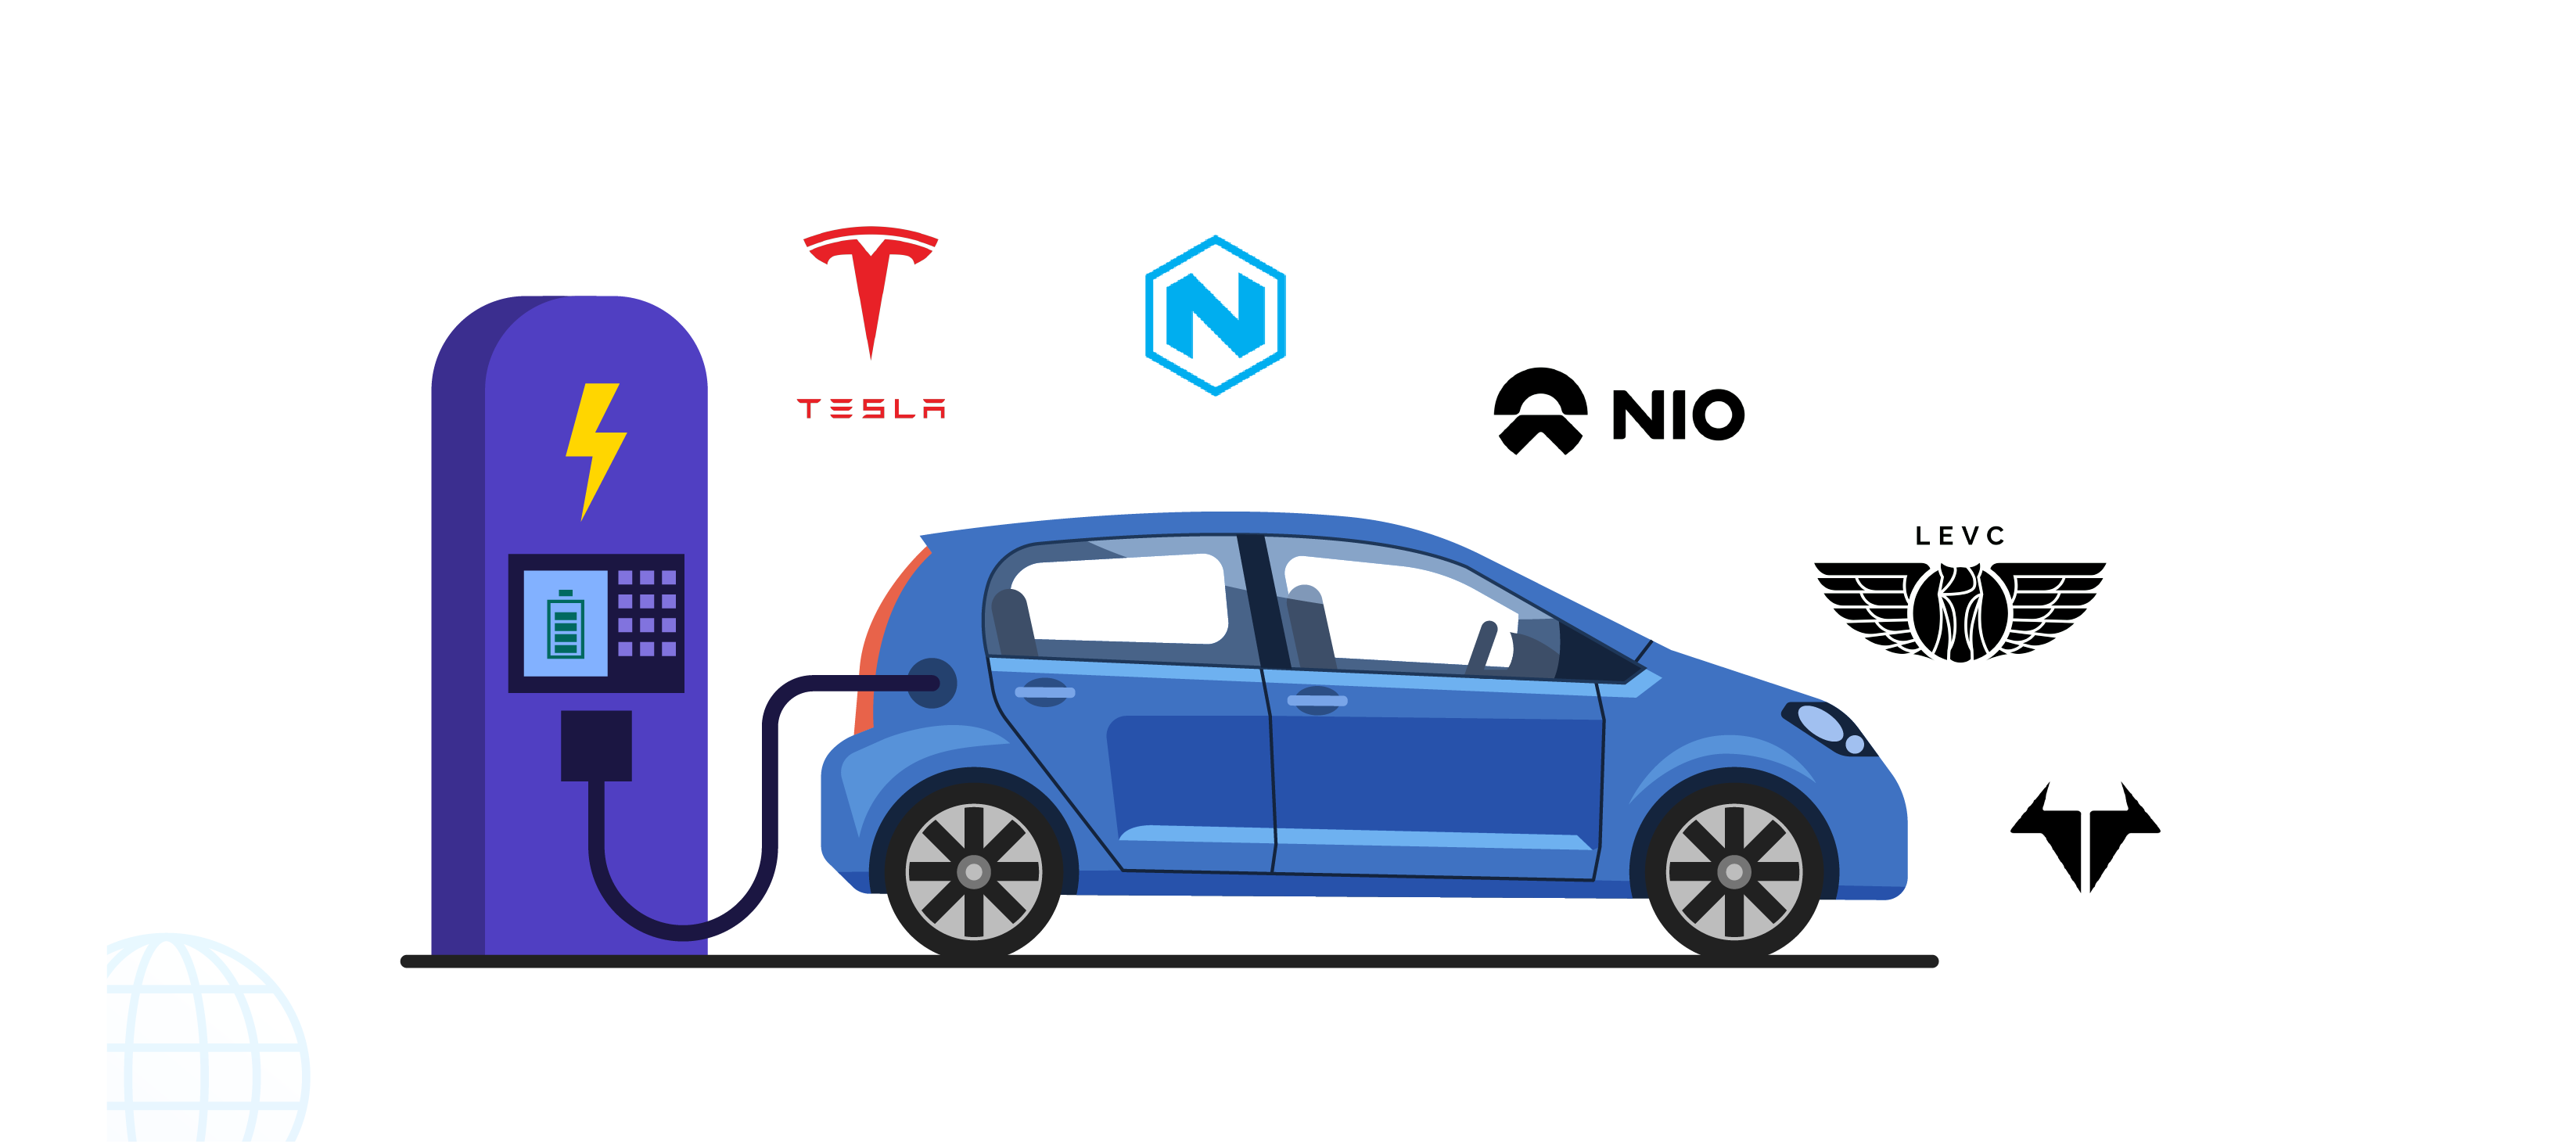 Few Electric Vehicle Companies